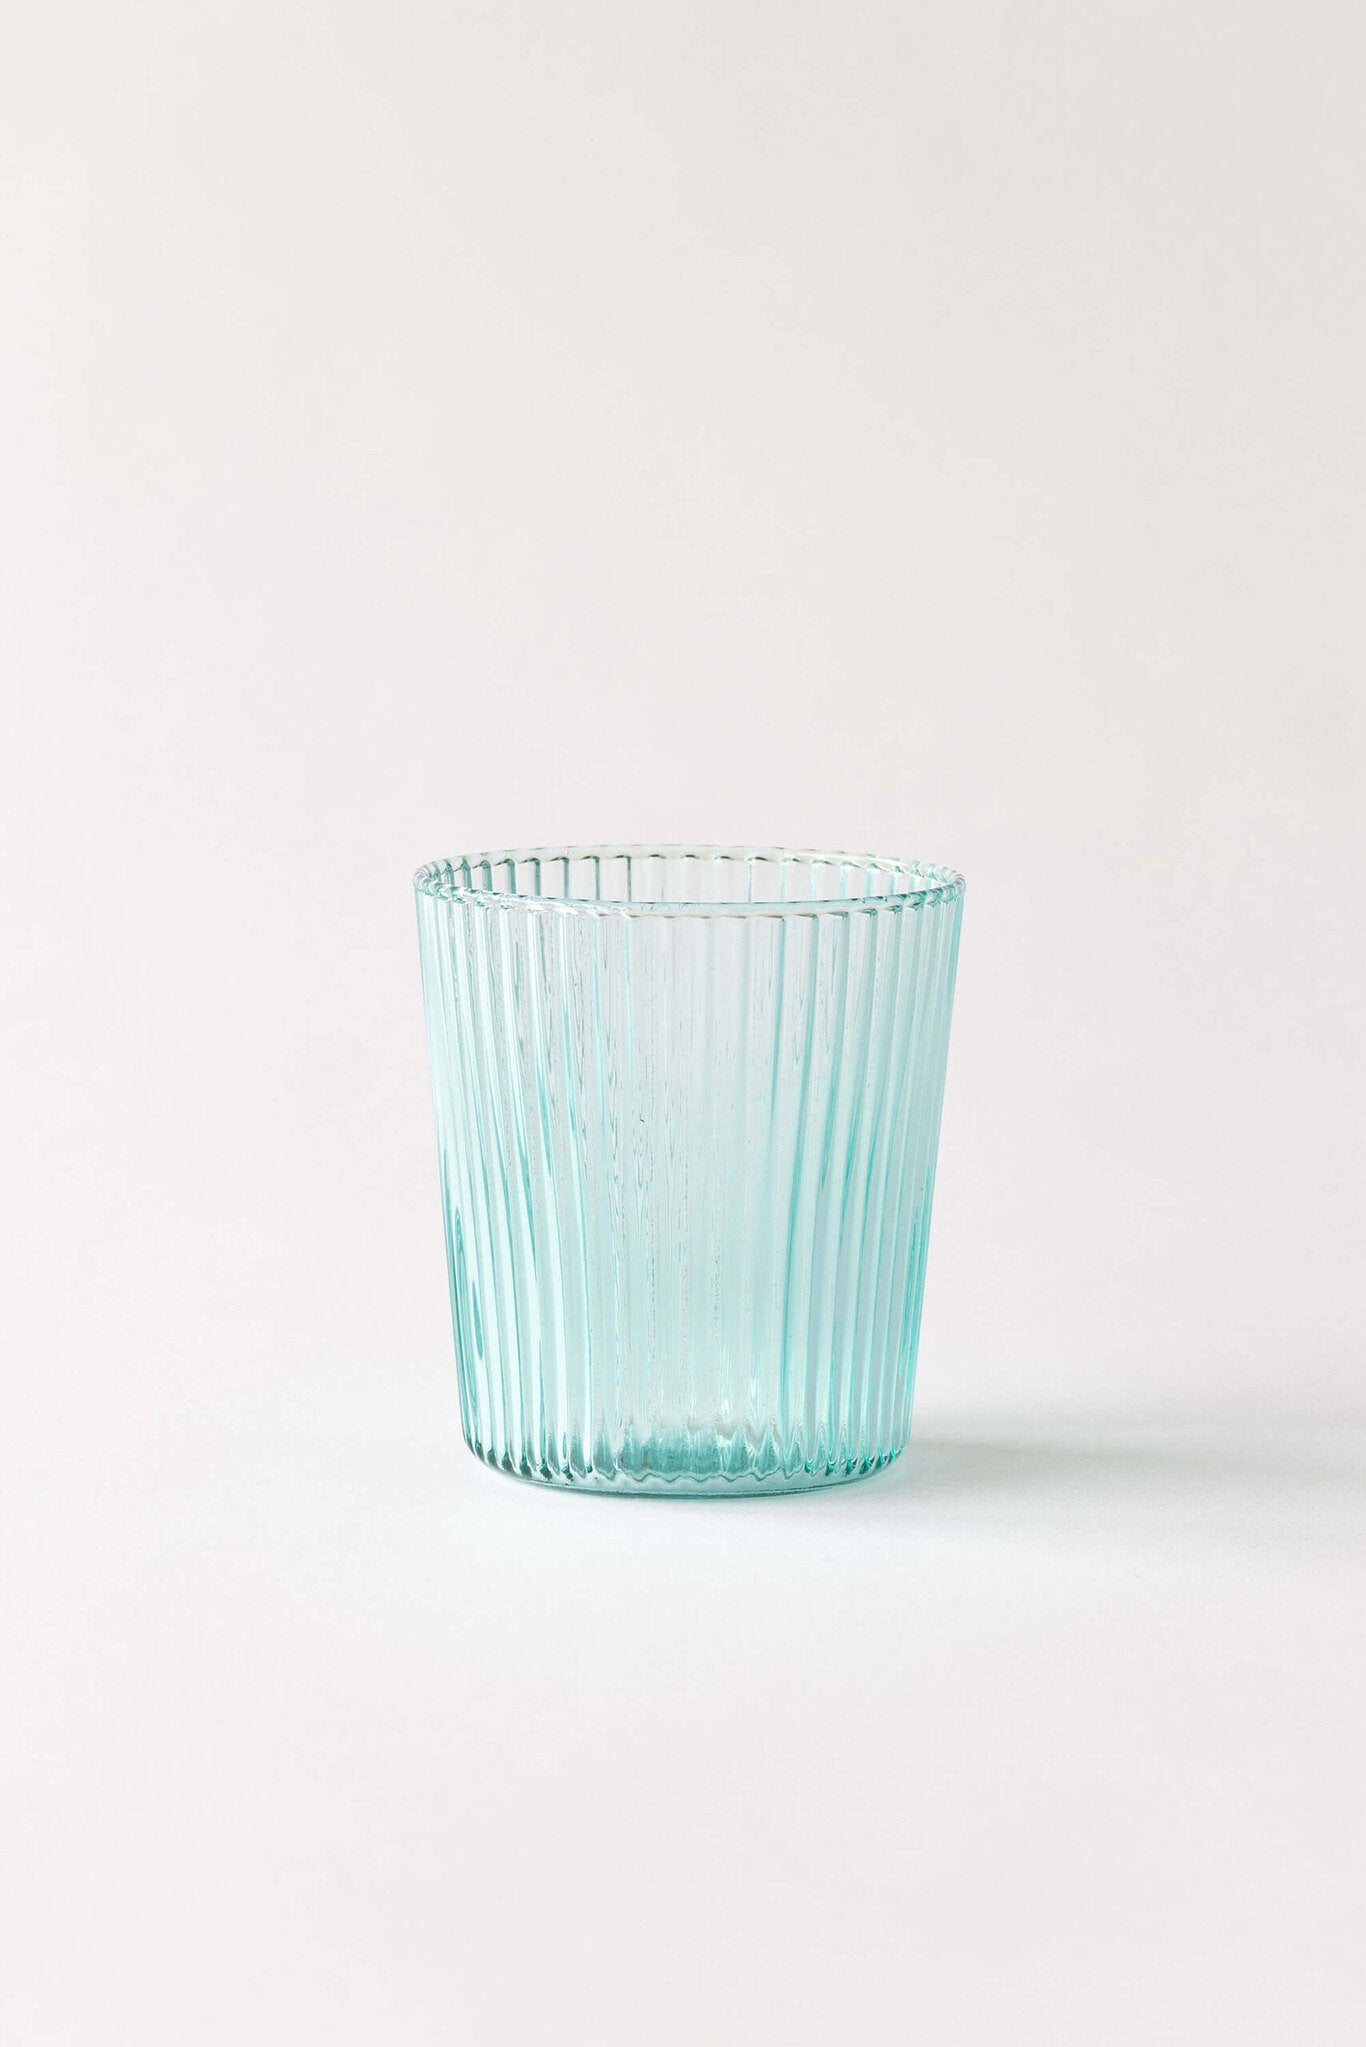 PAVEAU Paveau Waterglas Drinkglas Lucky Licht Blauw